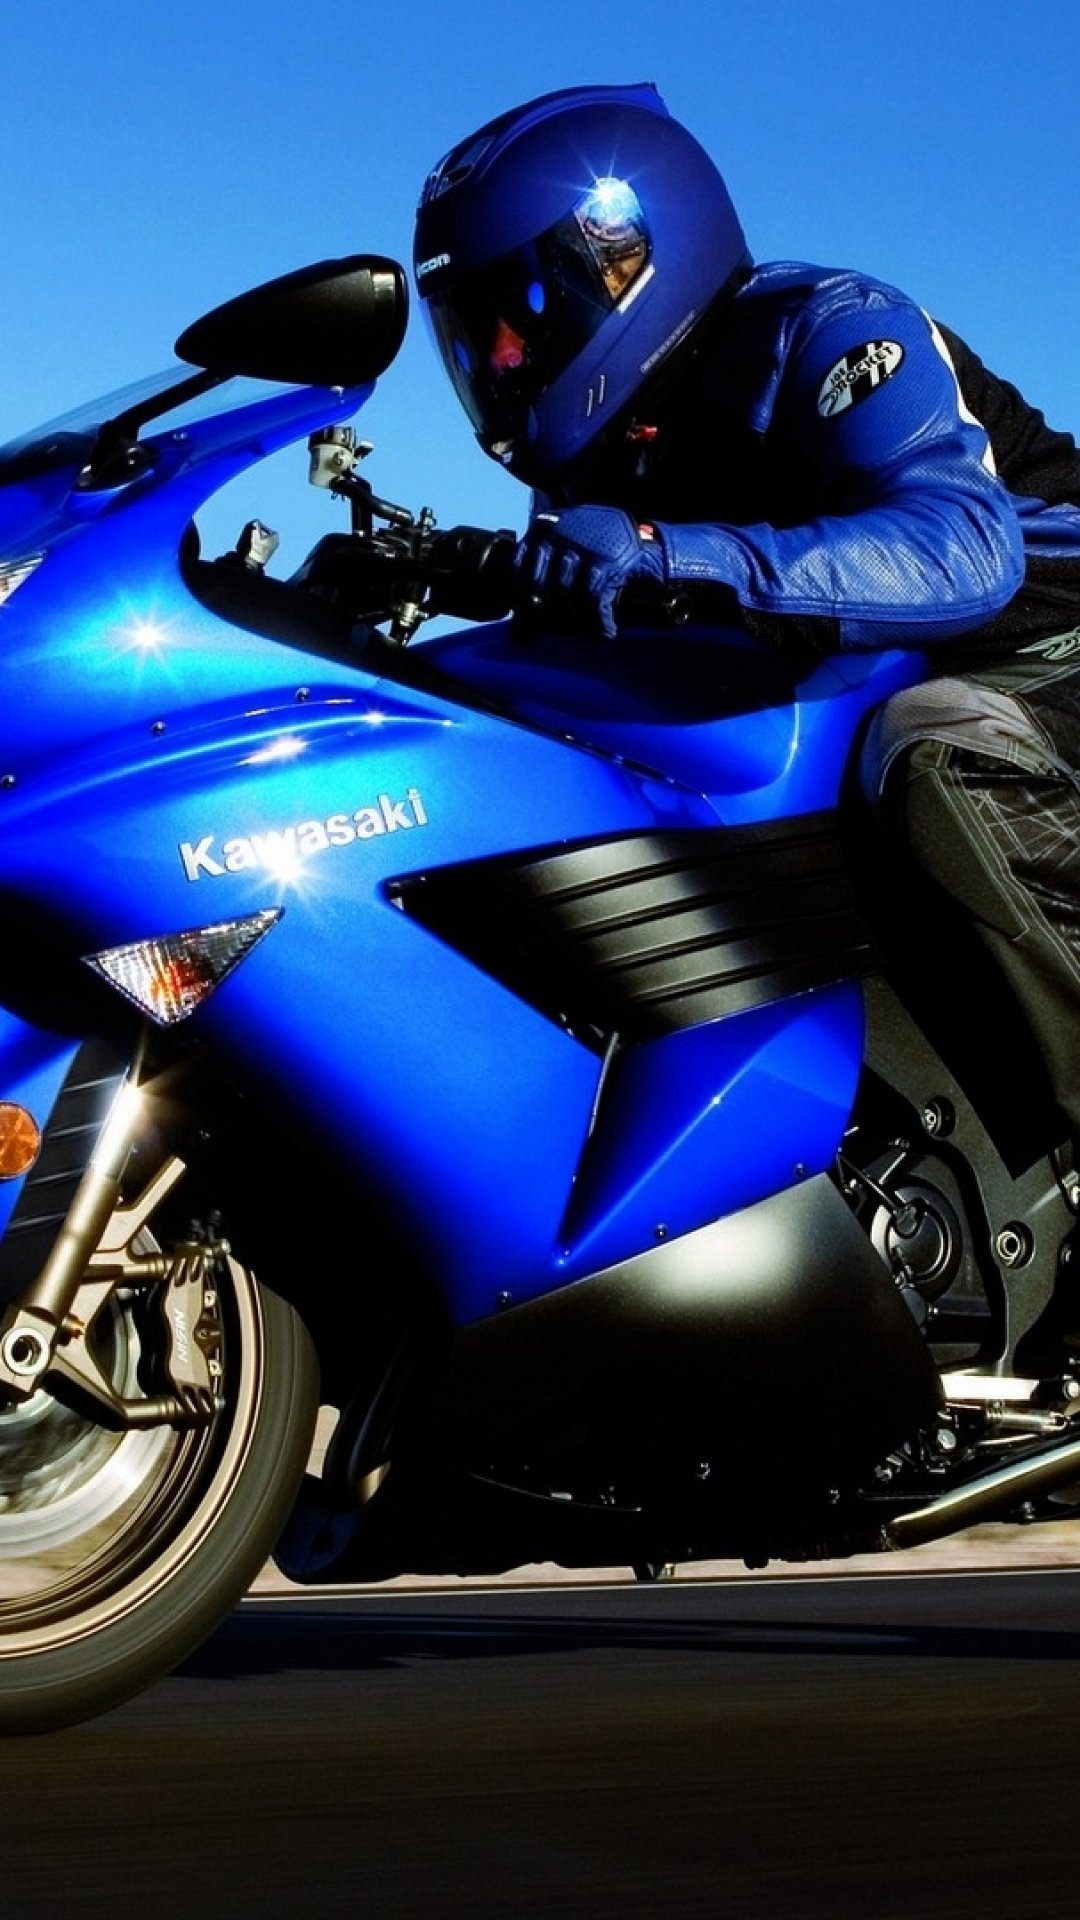 Включи байки синие. Кавасаки синий. Мотоцикл Yamaha r1. Скорость, мотоцикл, Кавасаки, синий. Синий мотоцикл.